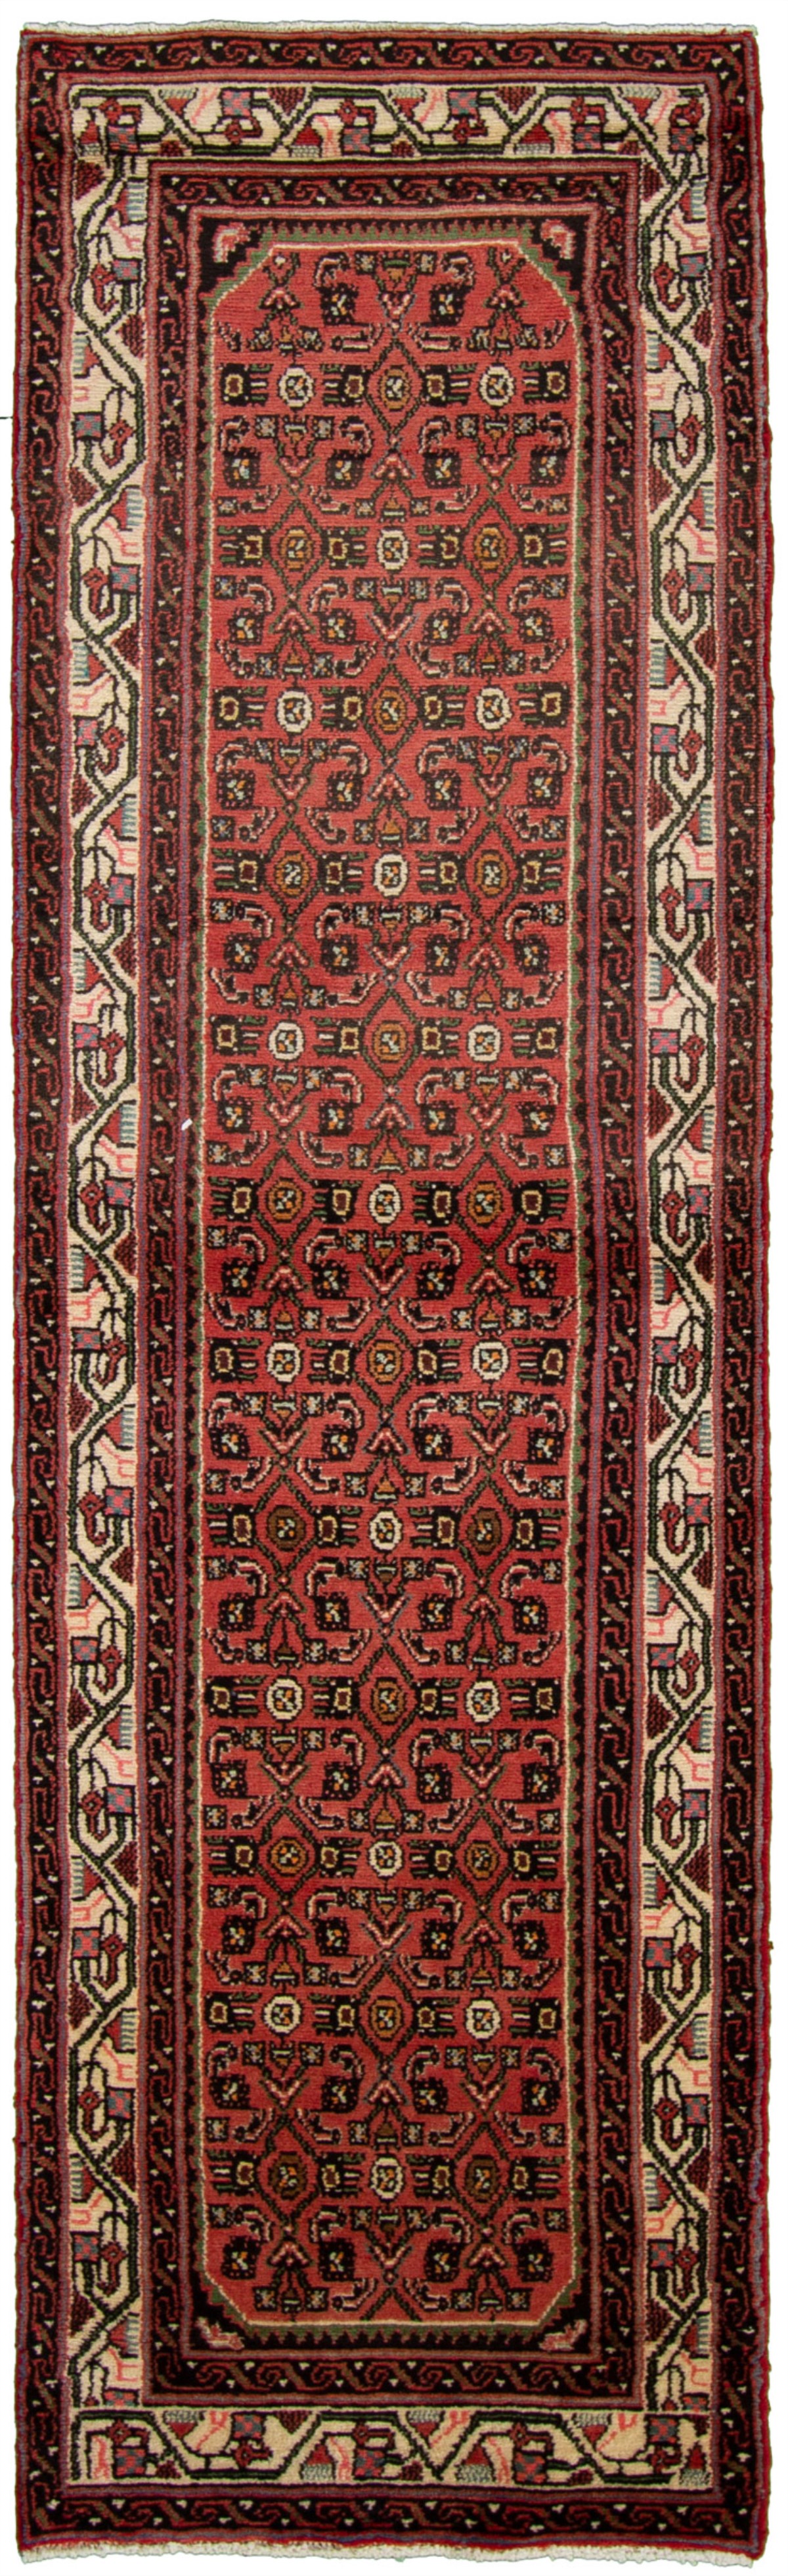 Hand-knotted Hamadan Dark Copper Wool Rug 2'8" x 9'4" Size: 2'8" x 9'4"  